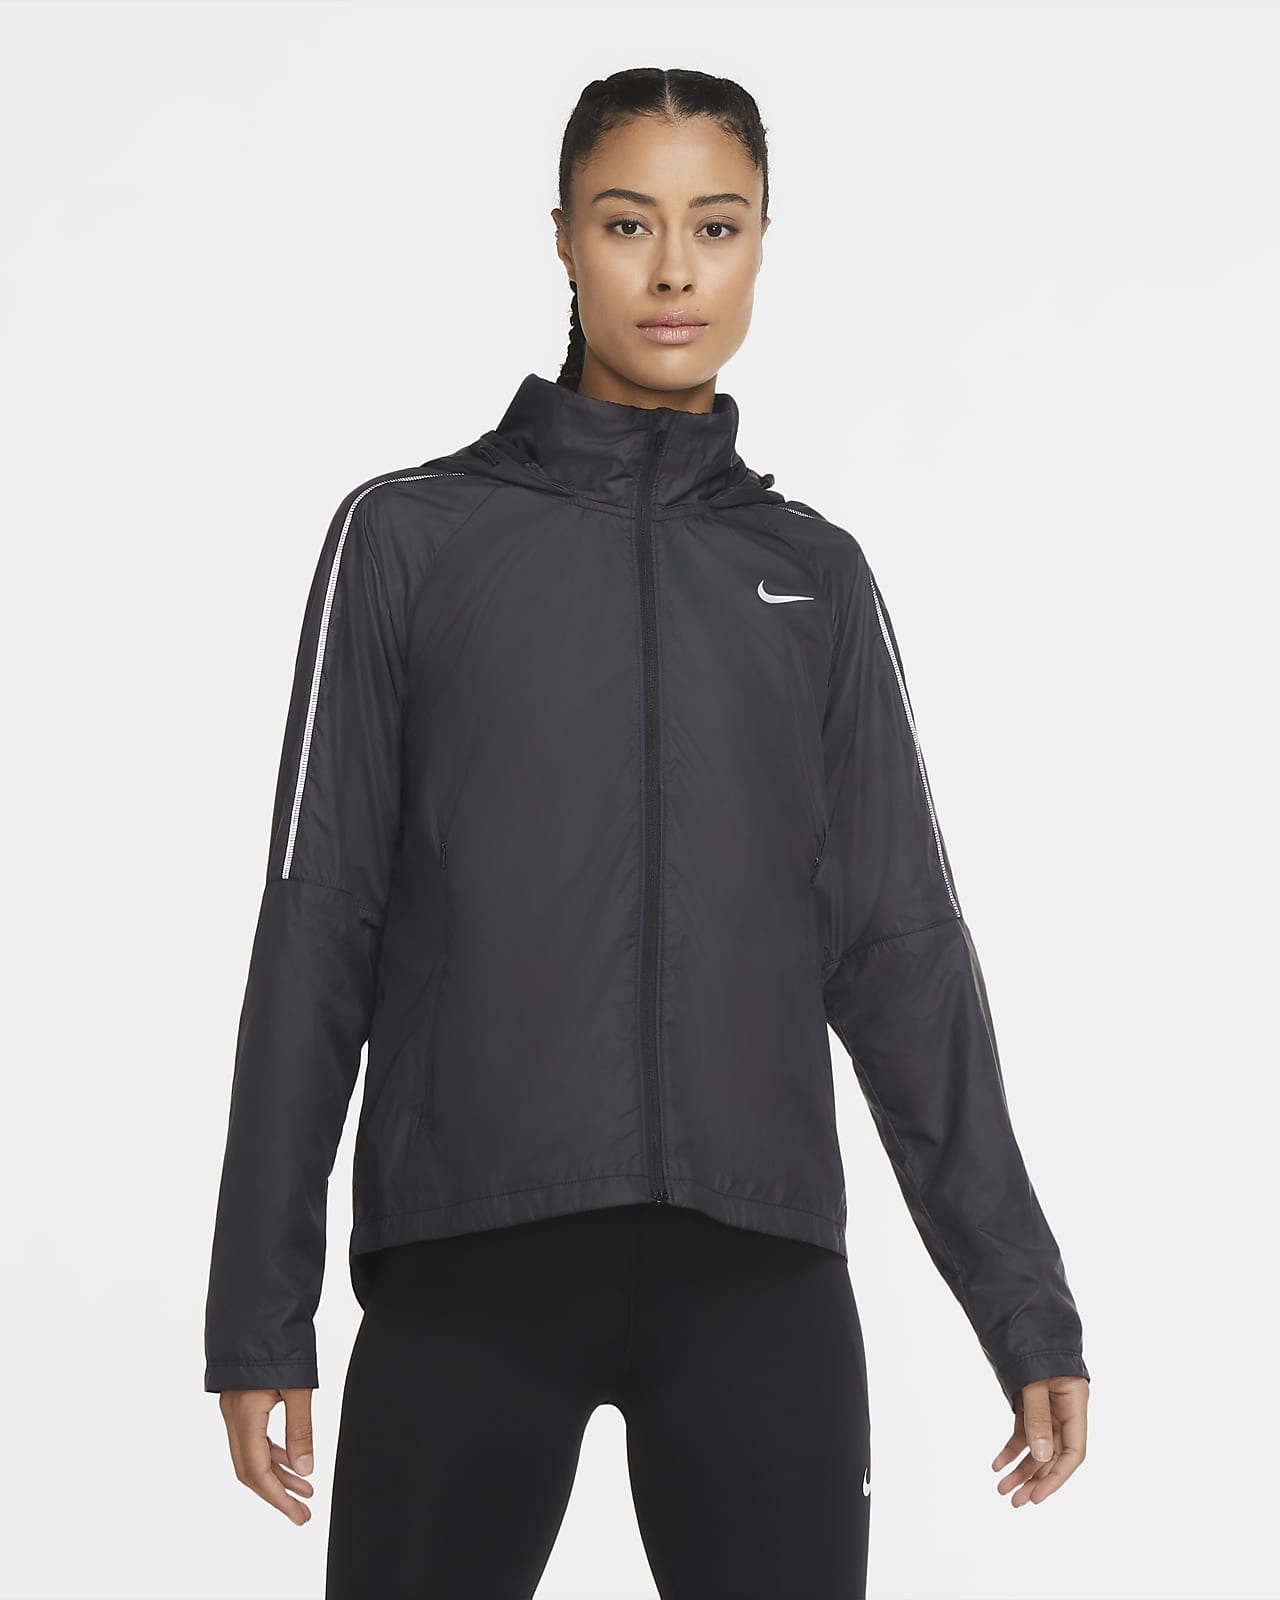 banda frio suicidio Nike Shield Women's Running Jacket. Nike GB